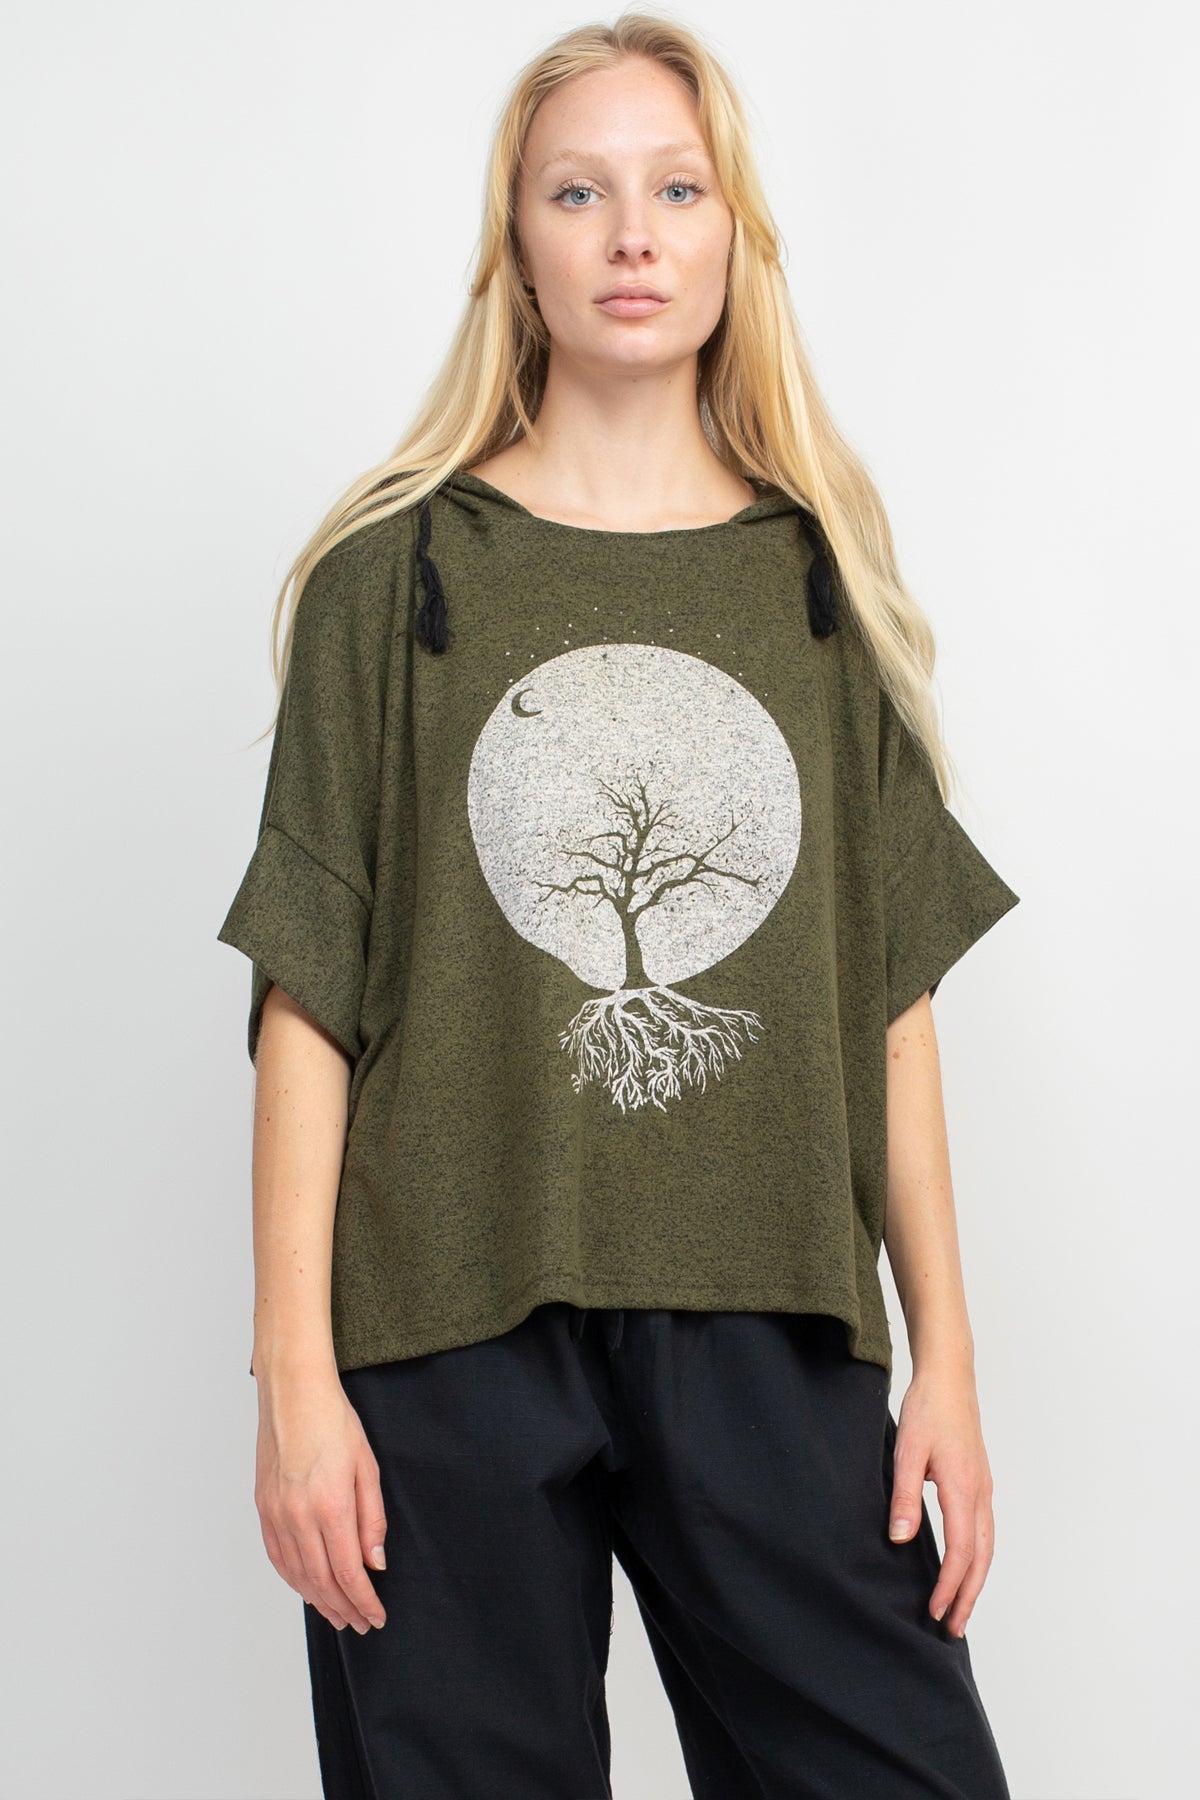 Lunar Tree of Life Oversize Soft Sweater